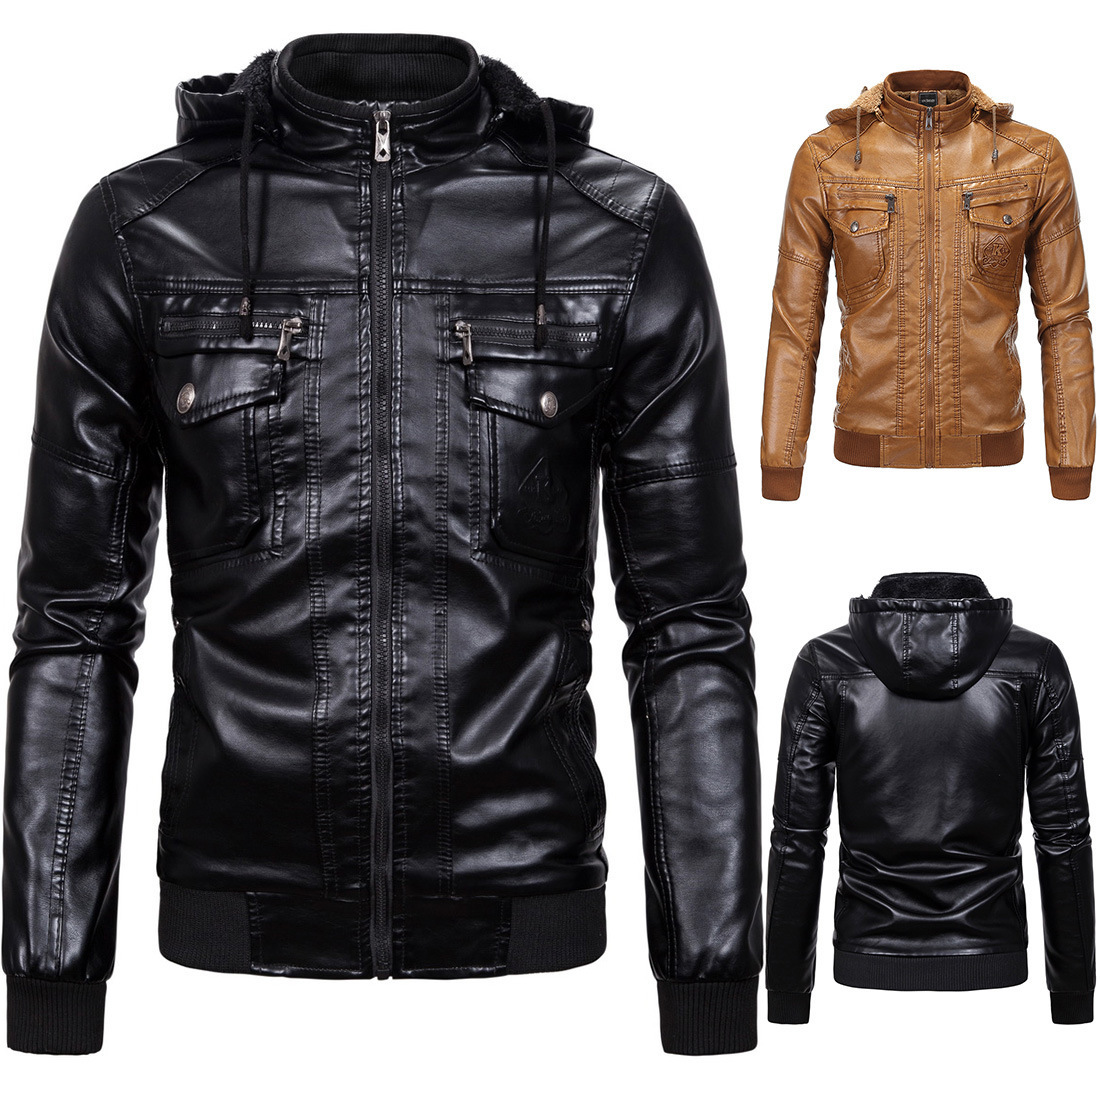 Double pocket leather jacket - CJdropshipping